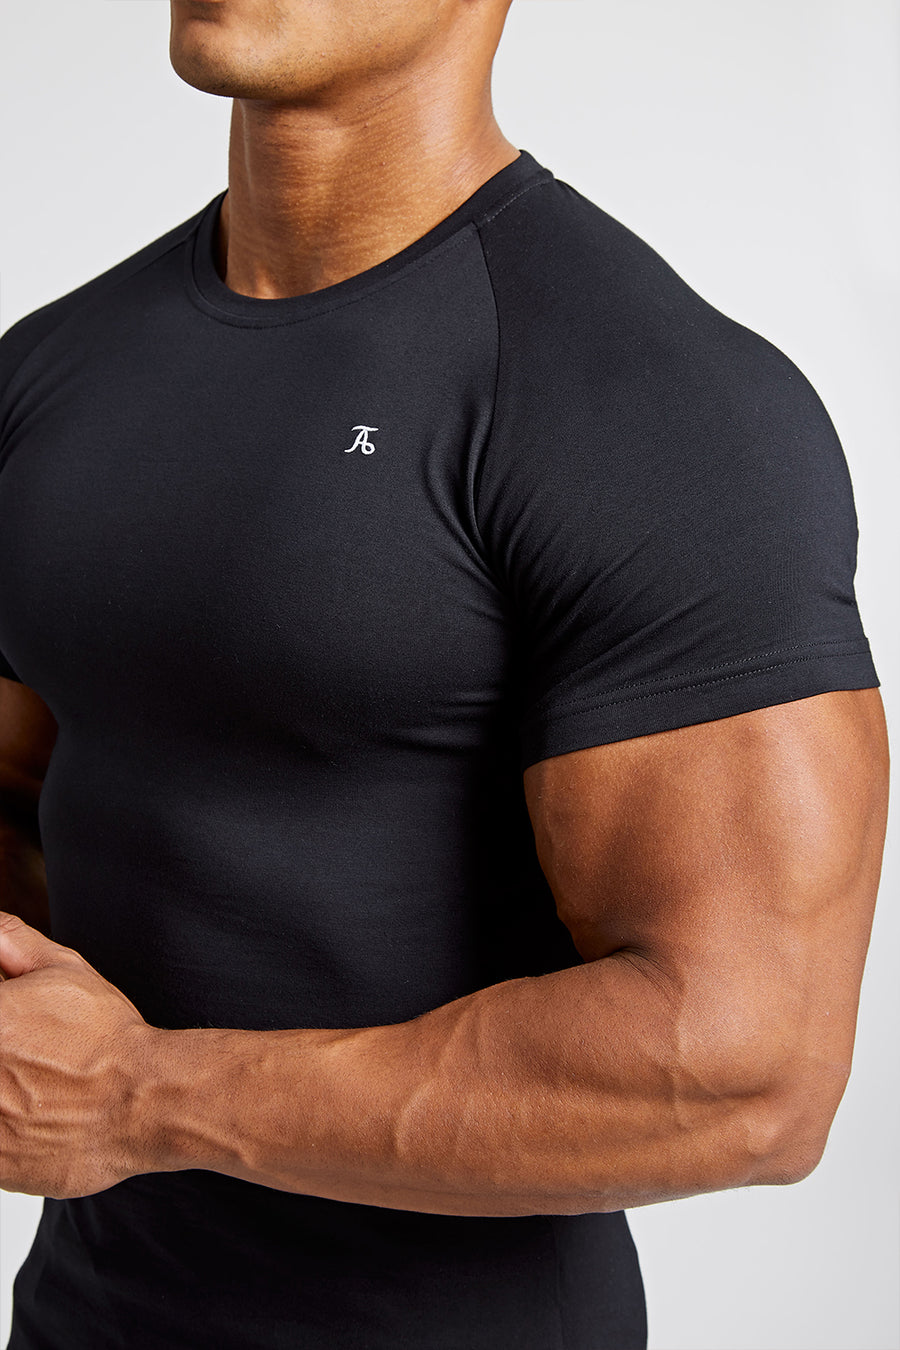 Premium Athletic Fit T-Shirt in Black - TAILORED ATHLETE - USA